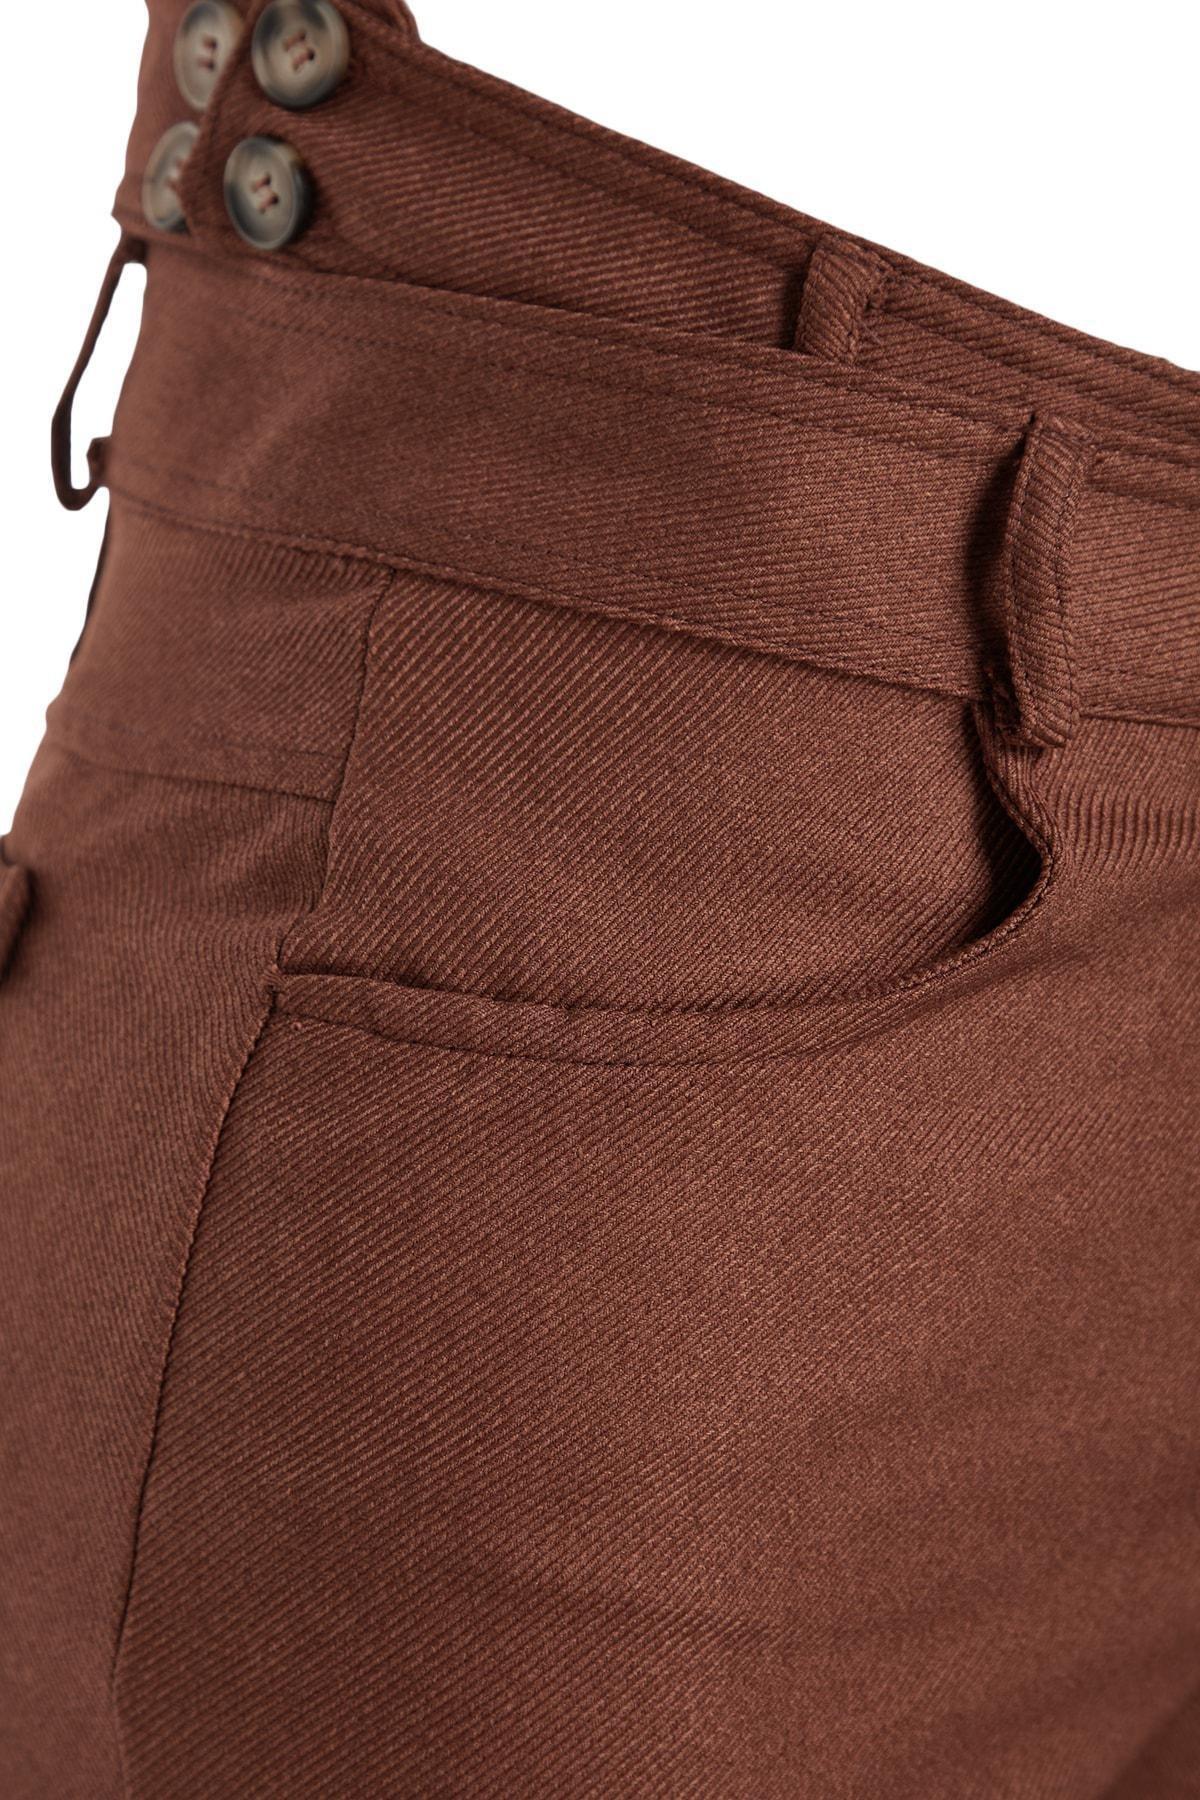 Trendyol - Brown High Waist Straight Trousers